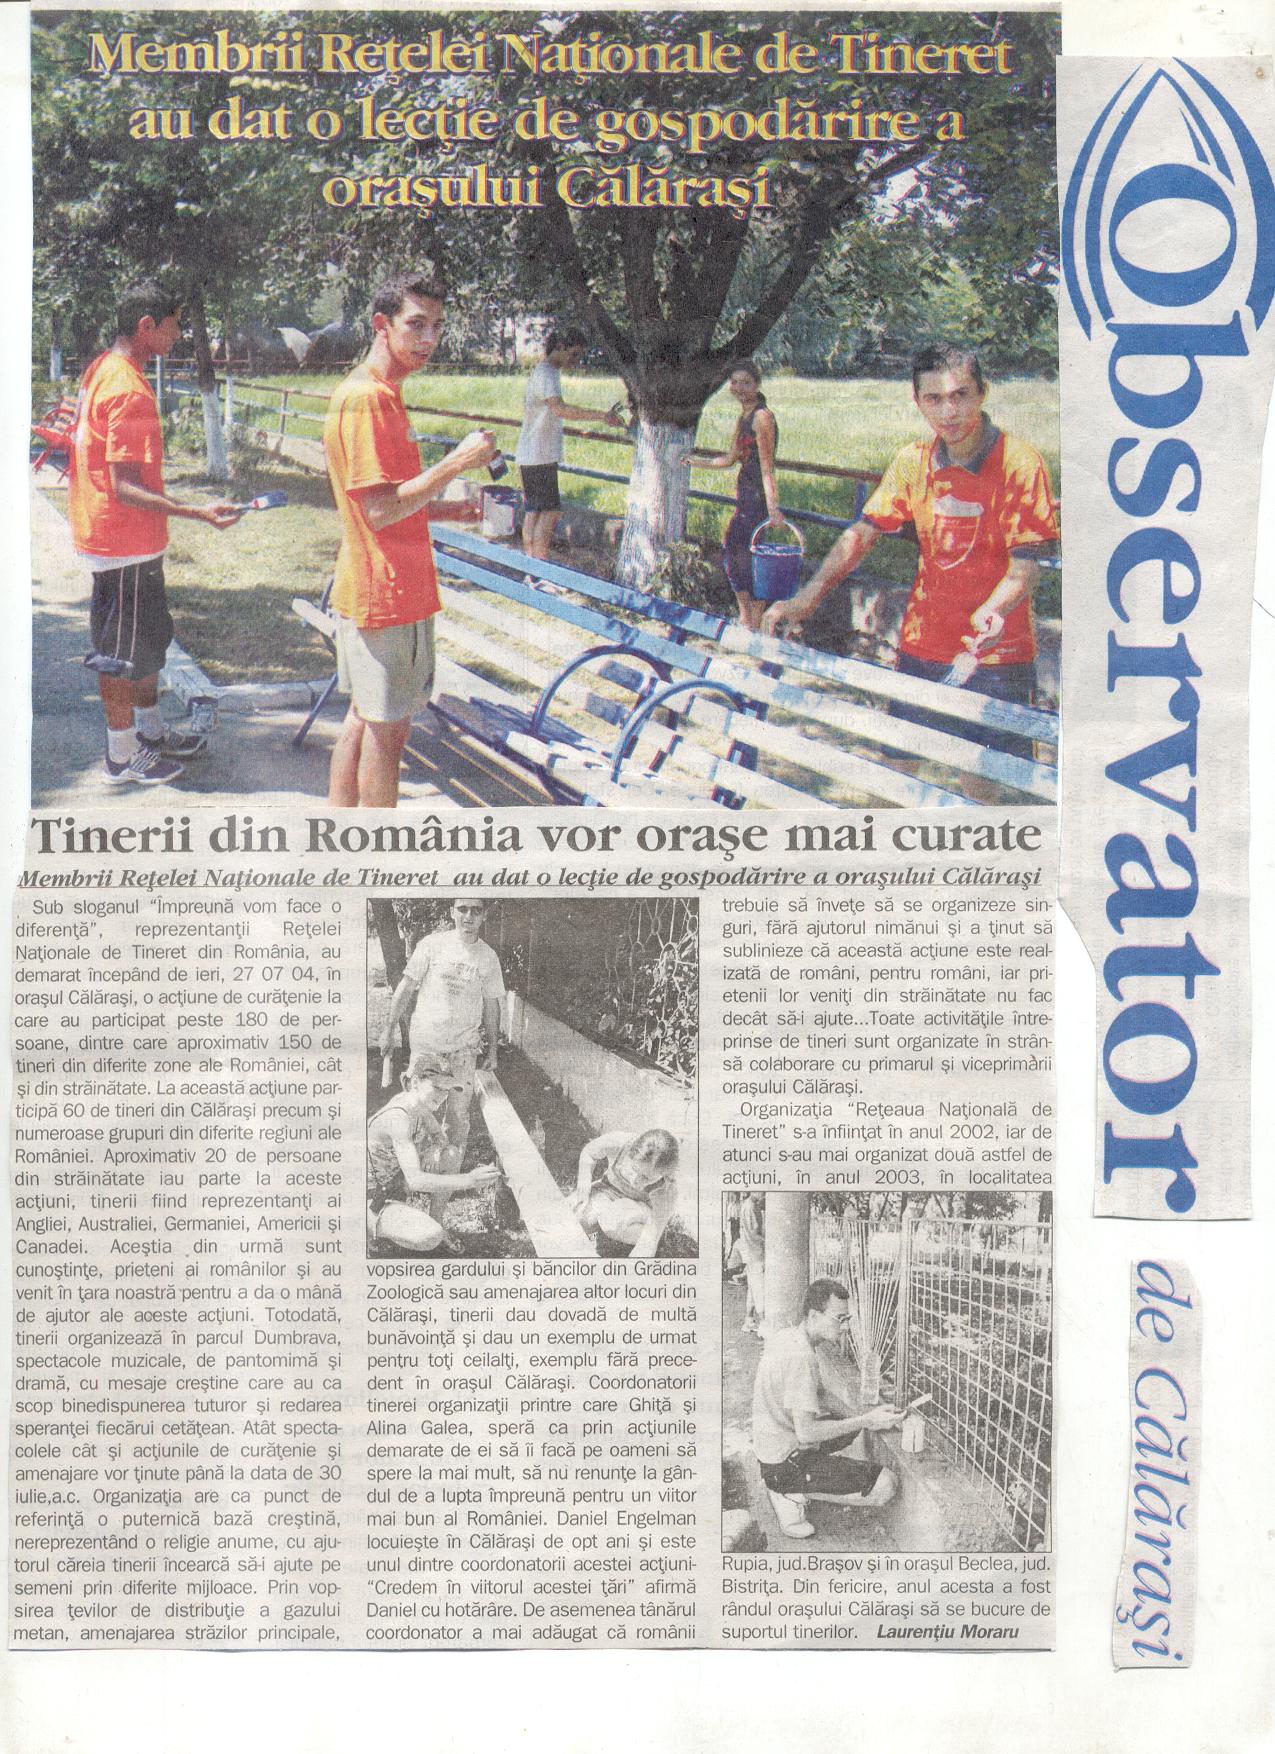 Calarasi newspaper article telling about orange shirt students